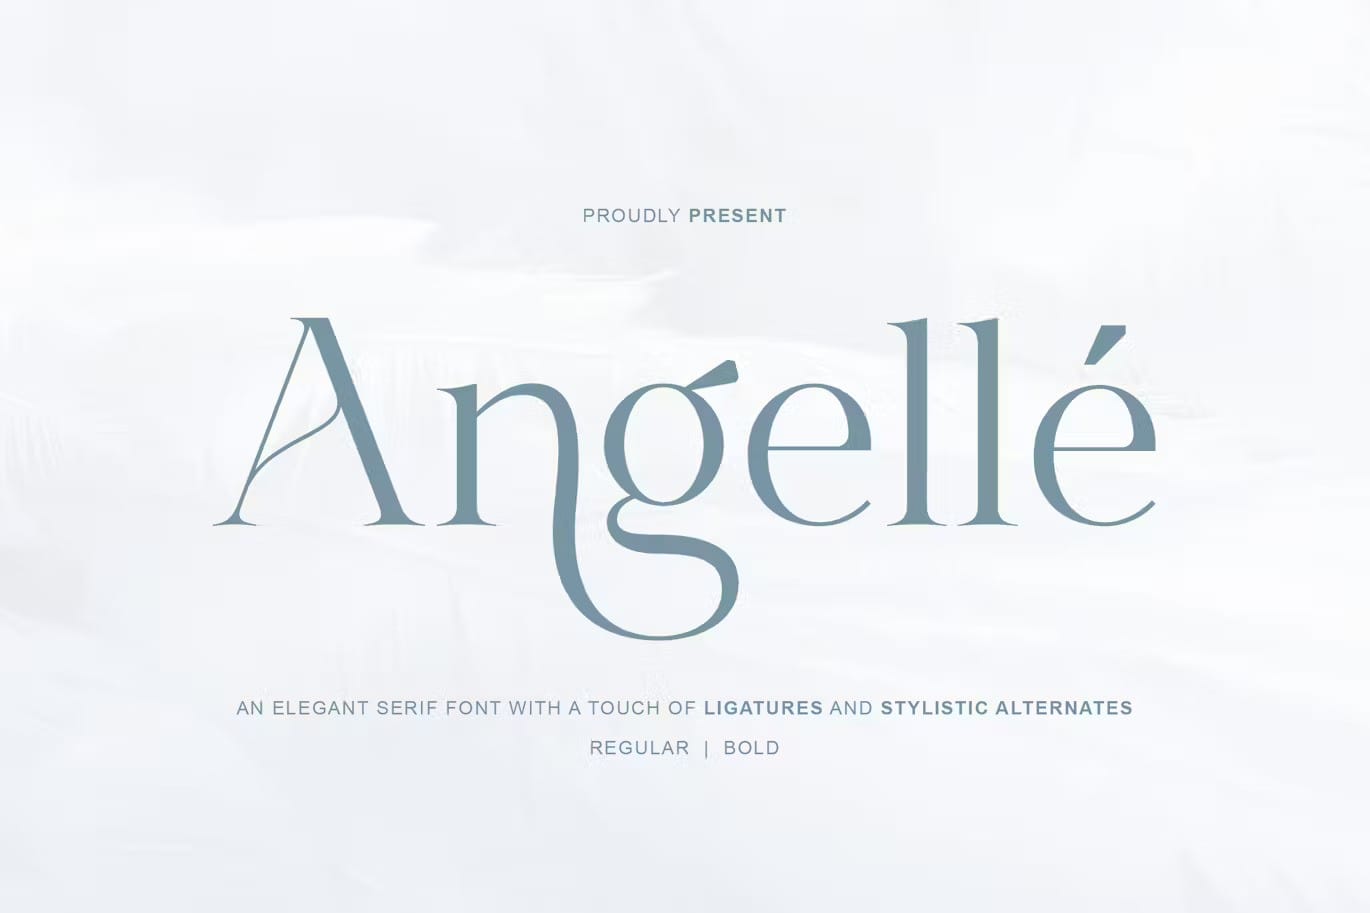 An elegant serif font